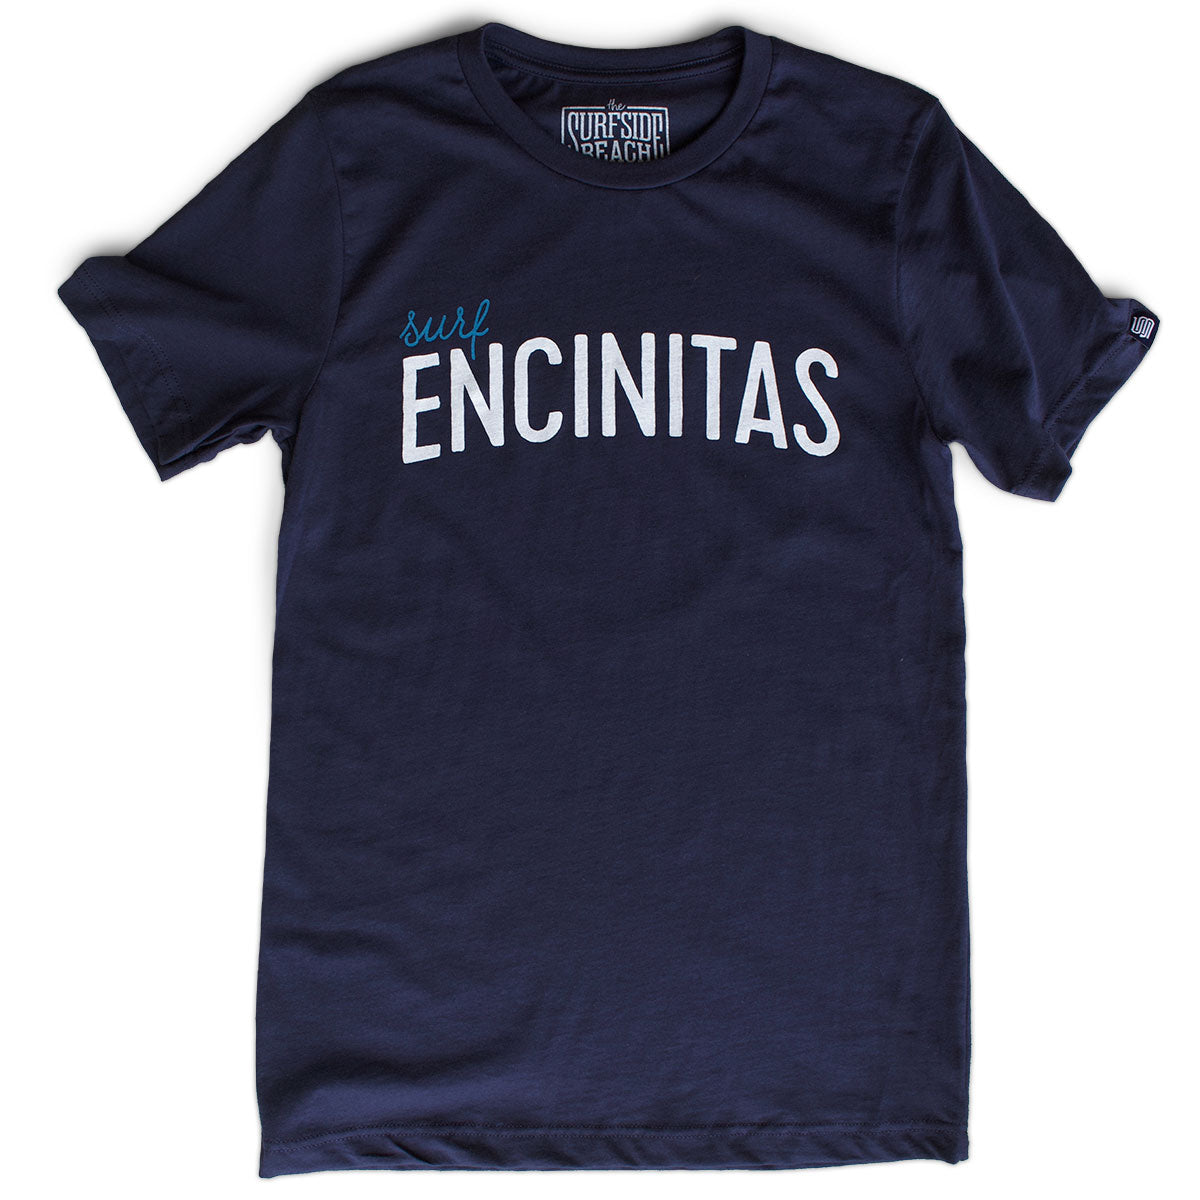 Surf Encinitas premium navy T-shirt